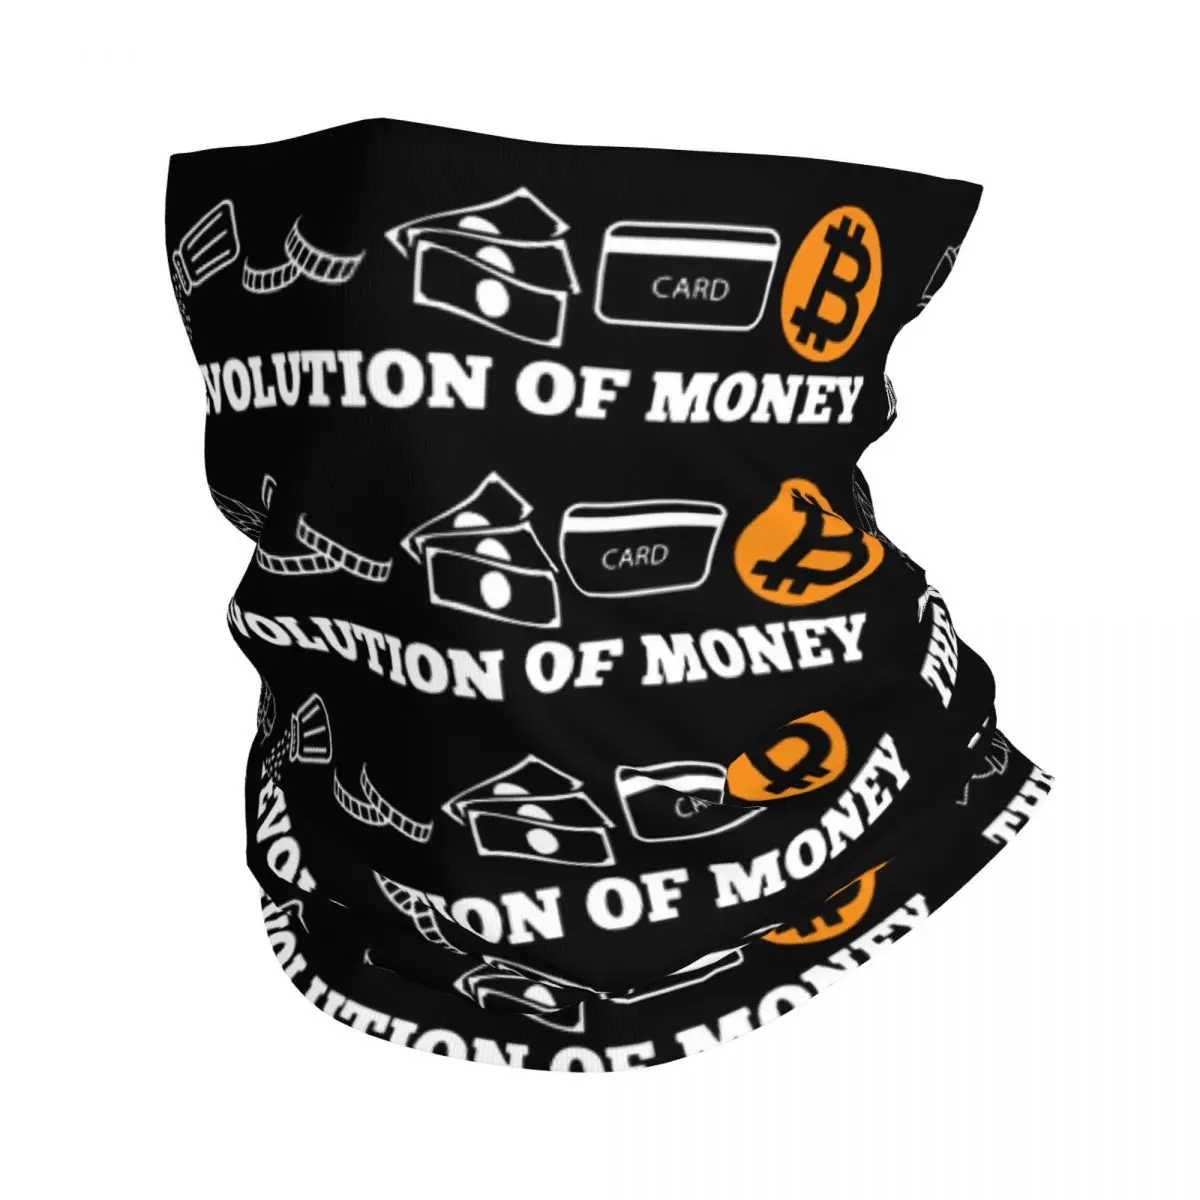 

The Evolution Of Money Bitcoin Btc Crypto Cryptocurrency Bandana Neck Gaiter Blockchain Magic Scarf Face Mask Fishing Windproof